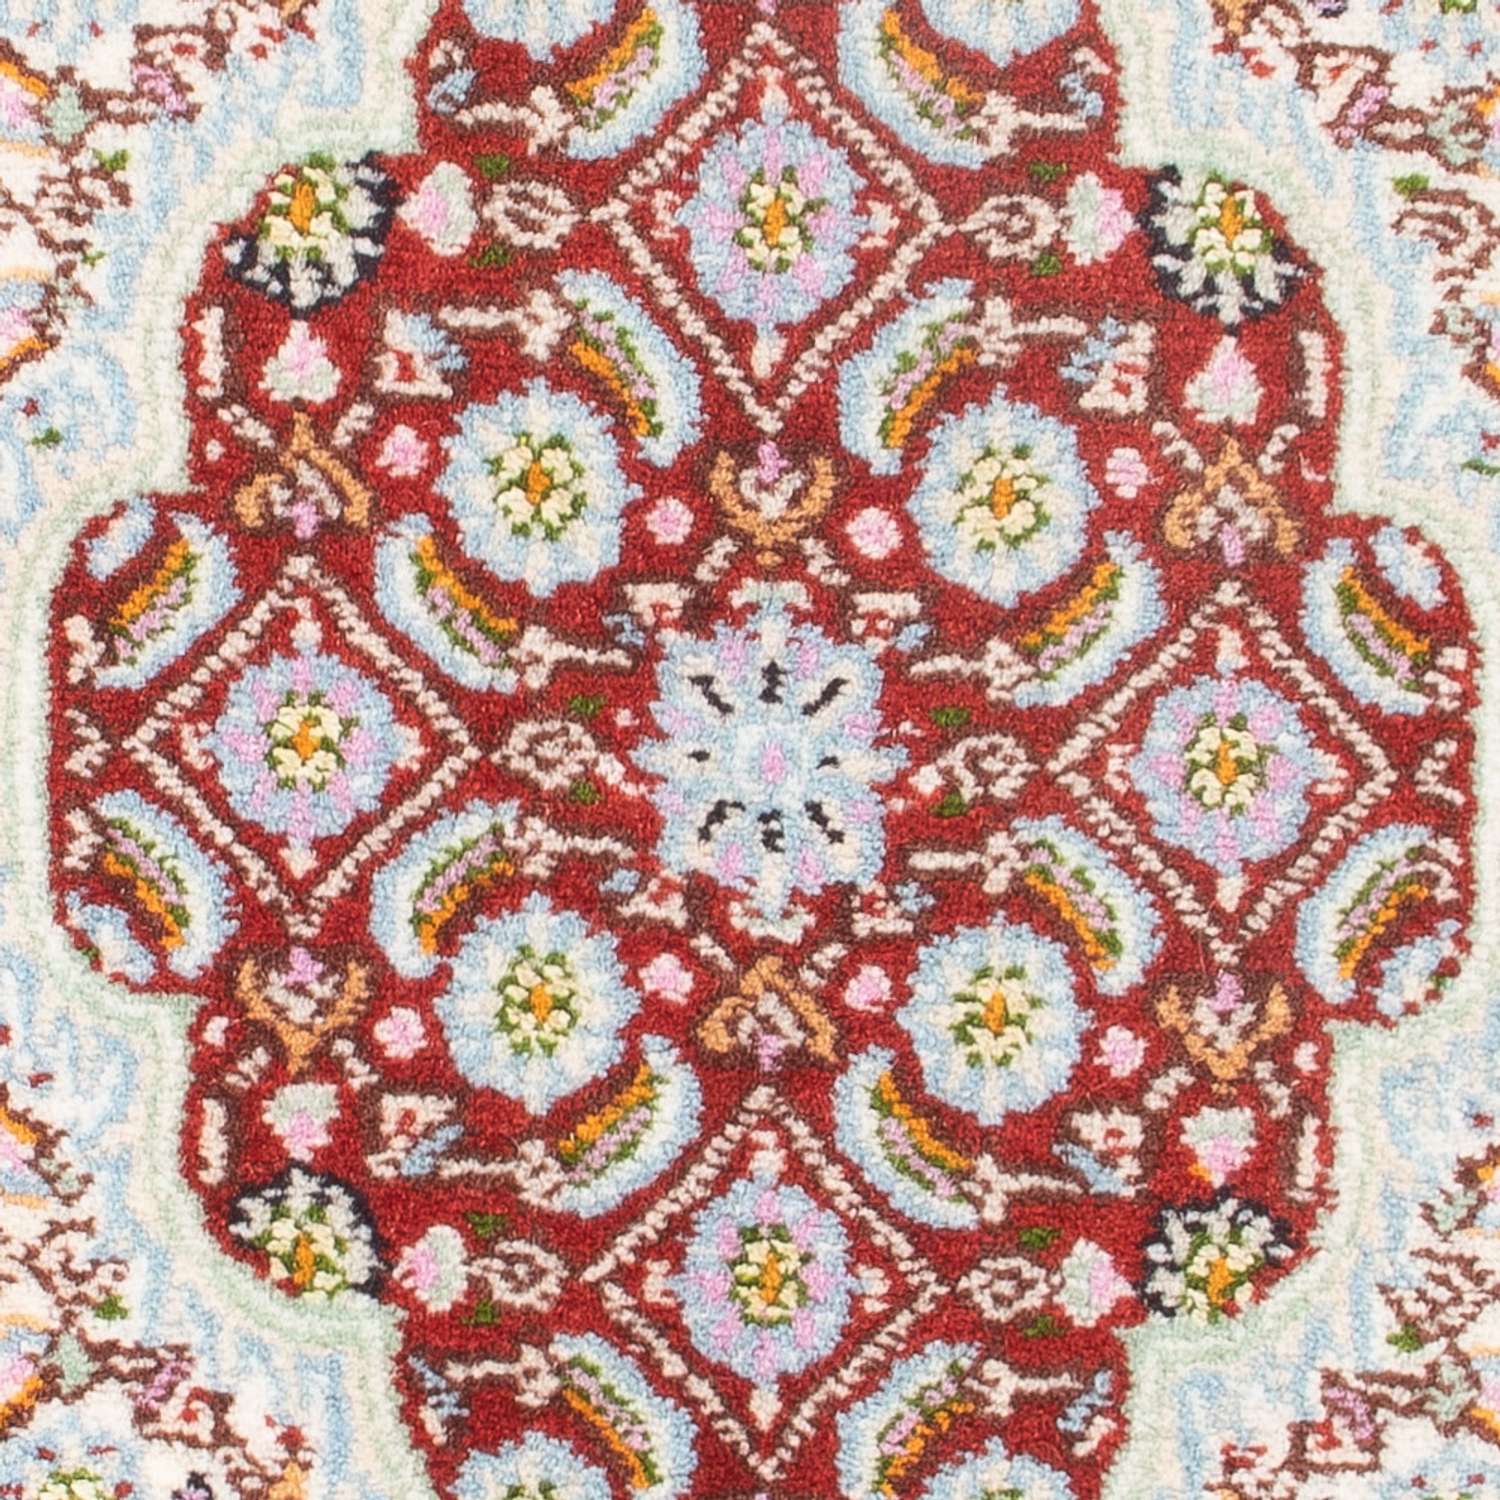 Persisk matta - Classic - Kungliga - 90 x 60 cm - röd